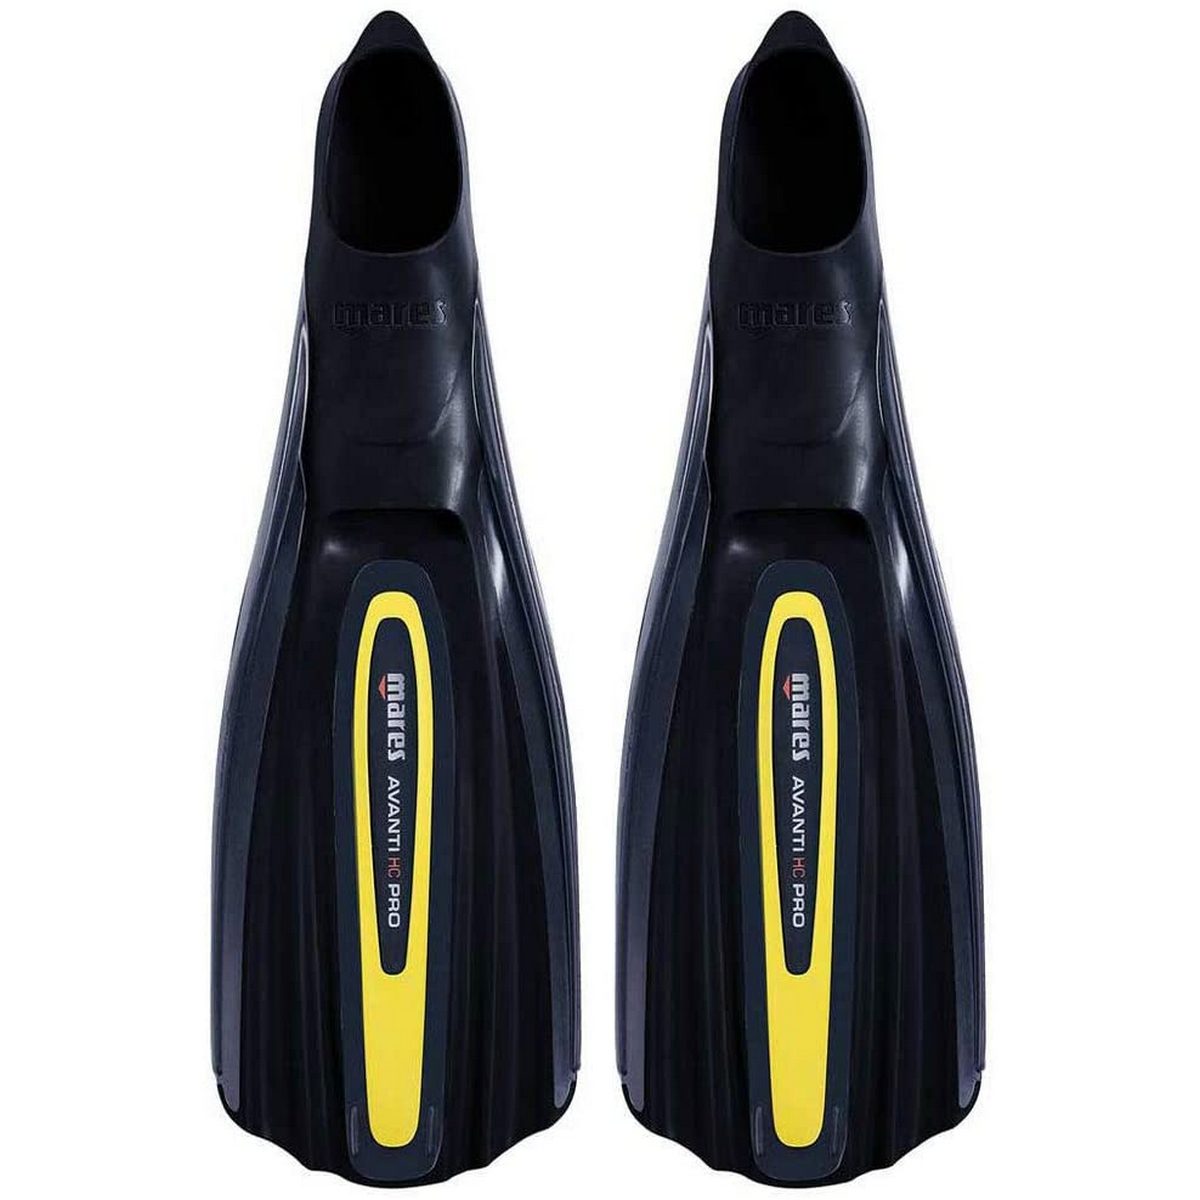 Ласты для плавания Mares Avanti HC Pro FF 410347 размер 36-37 черно-желтый